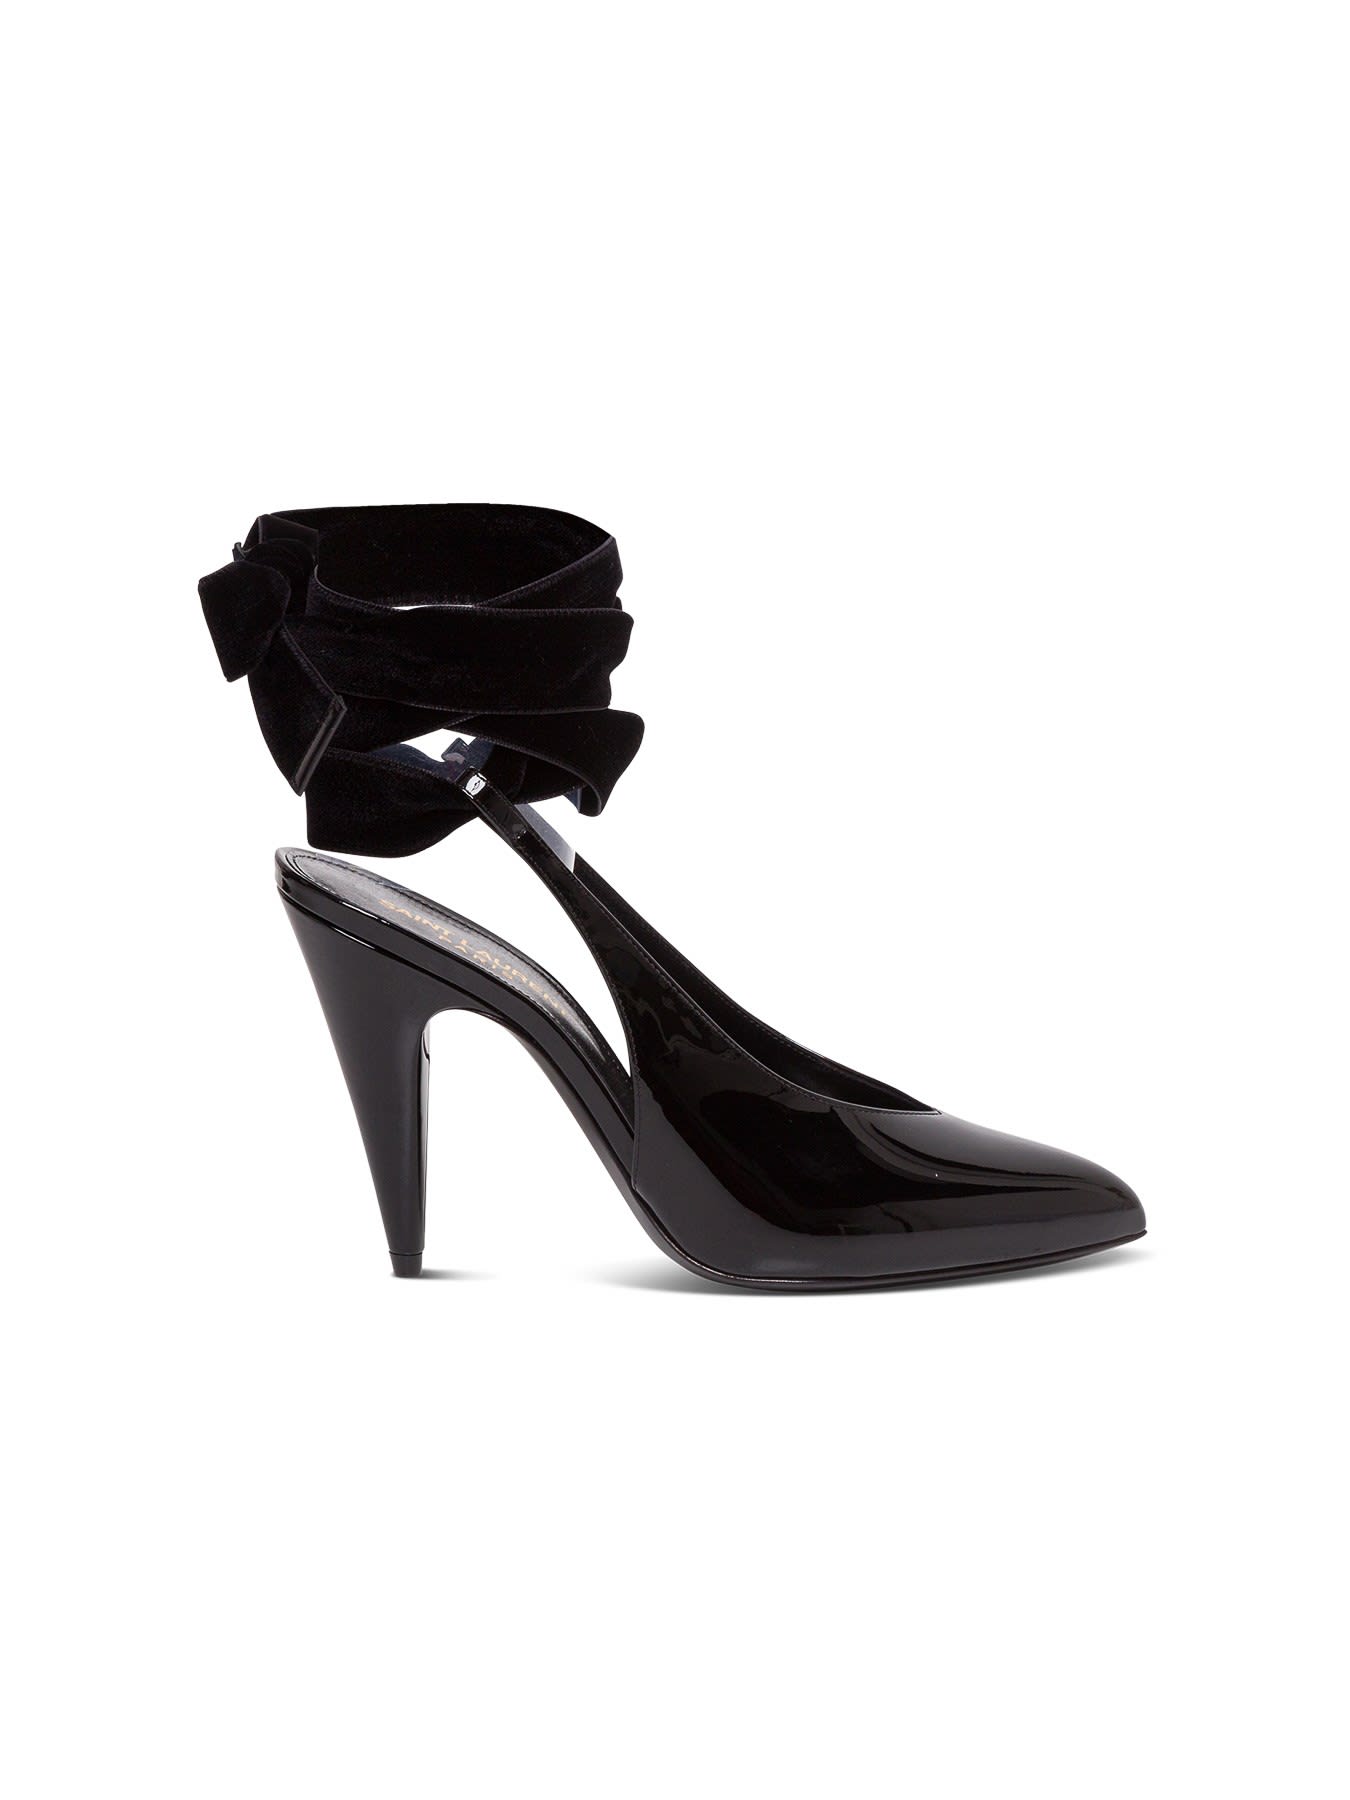 Buy Saint Laurent Kika 95 Slingback In Black Patent online, shop Saint Laurent shoes with free shipping